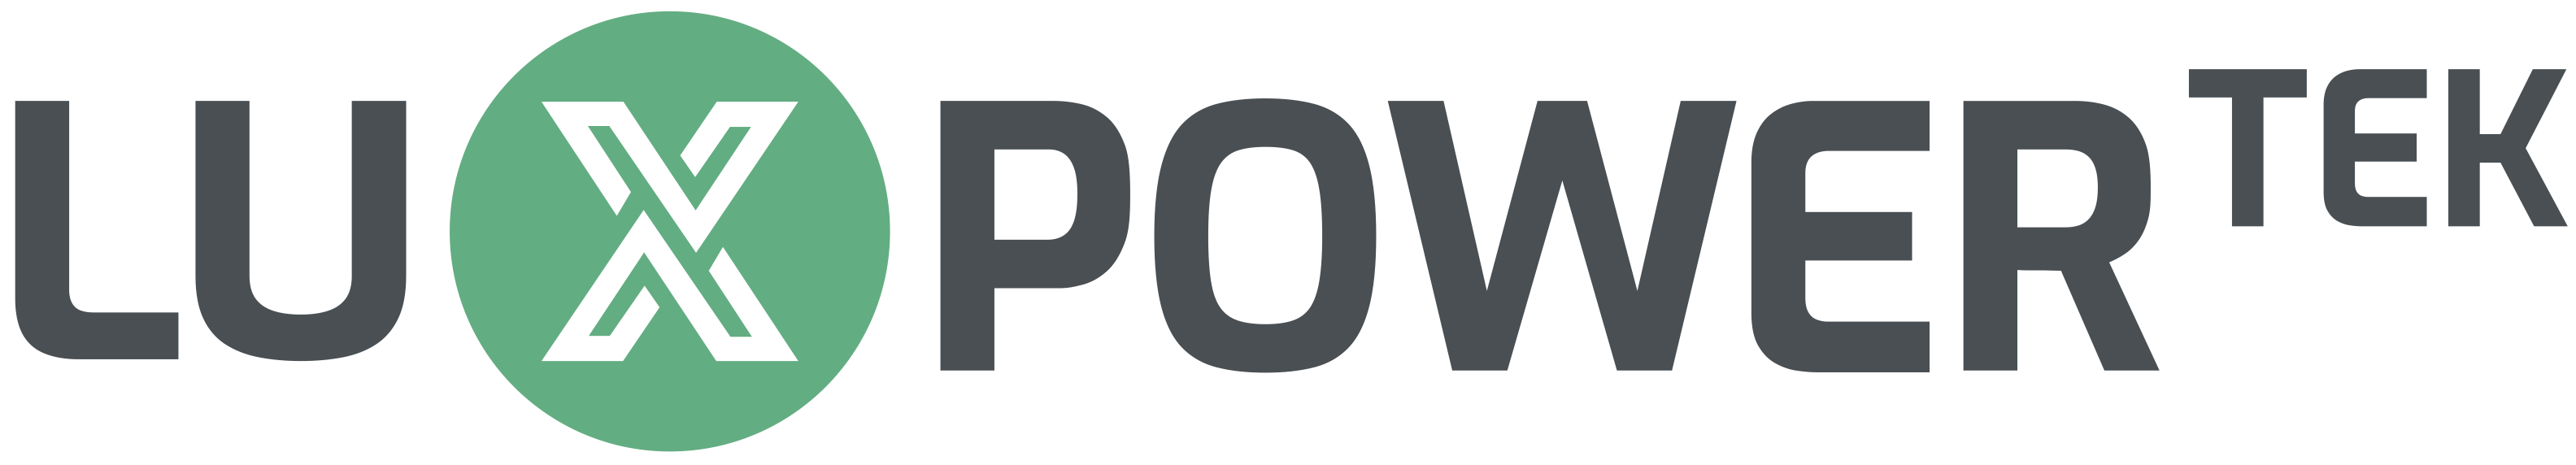 Luxpower-logo111